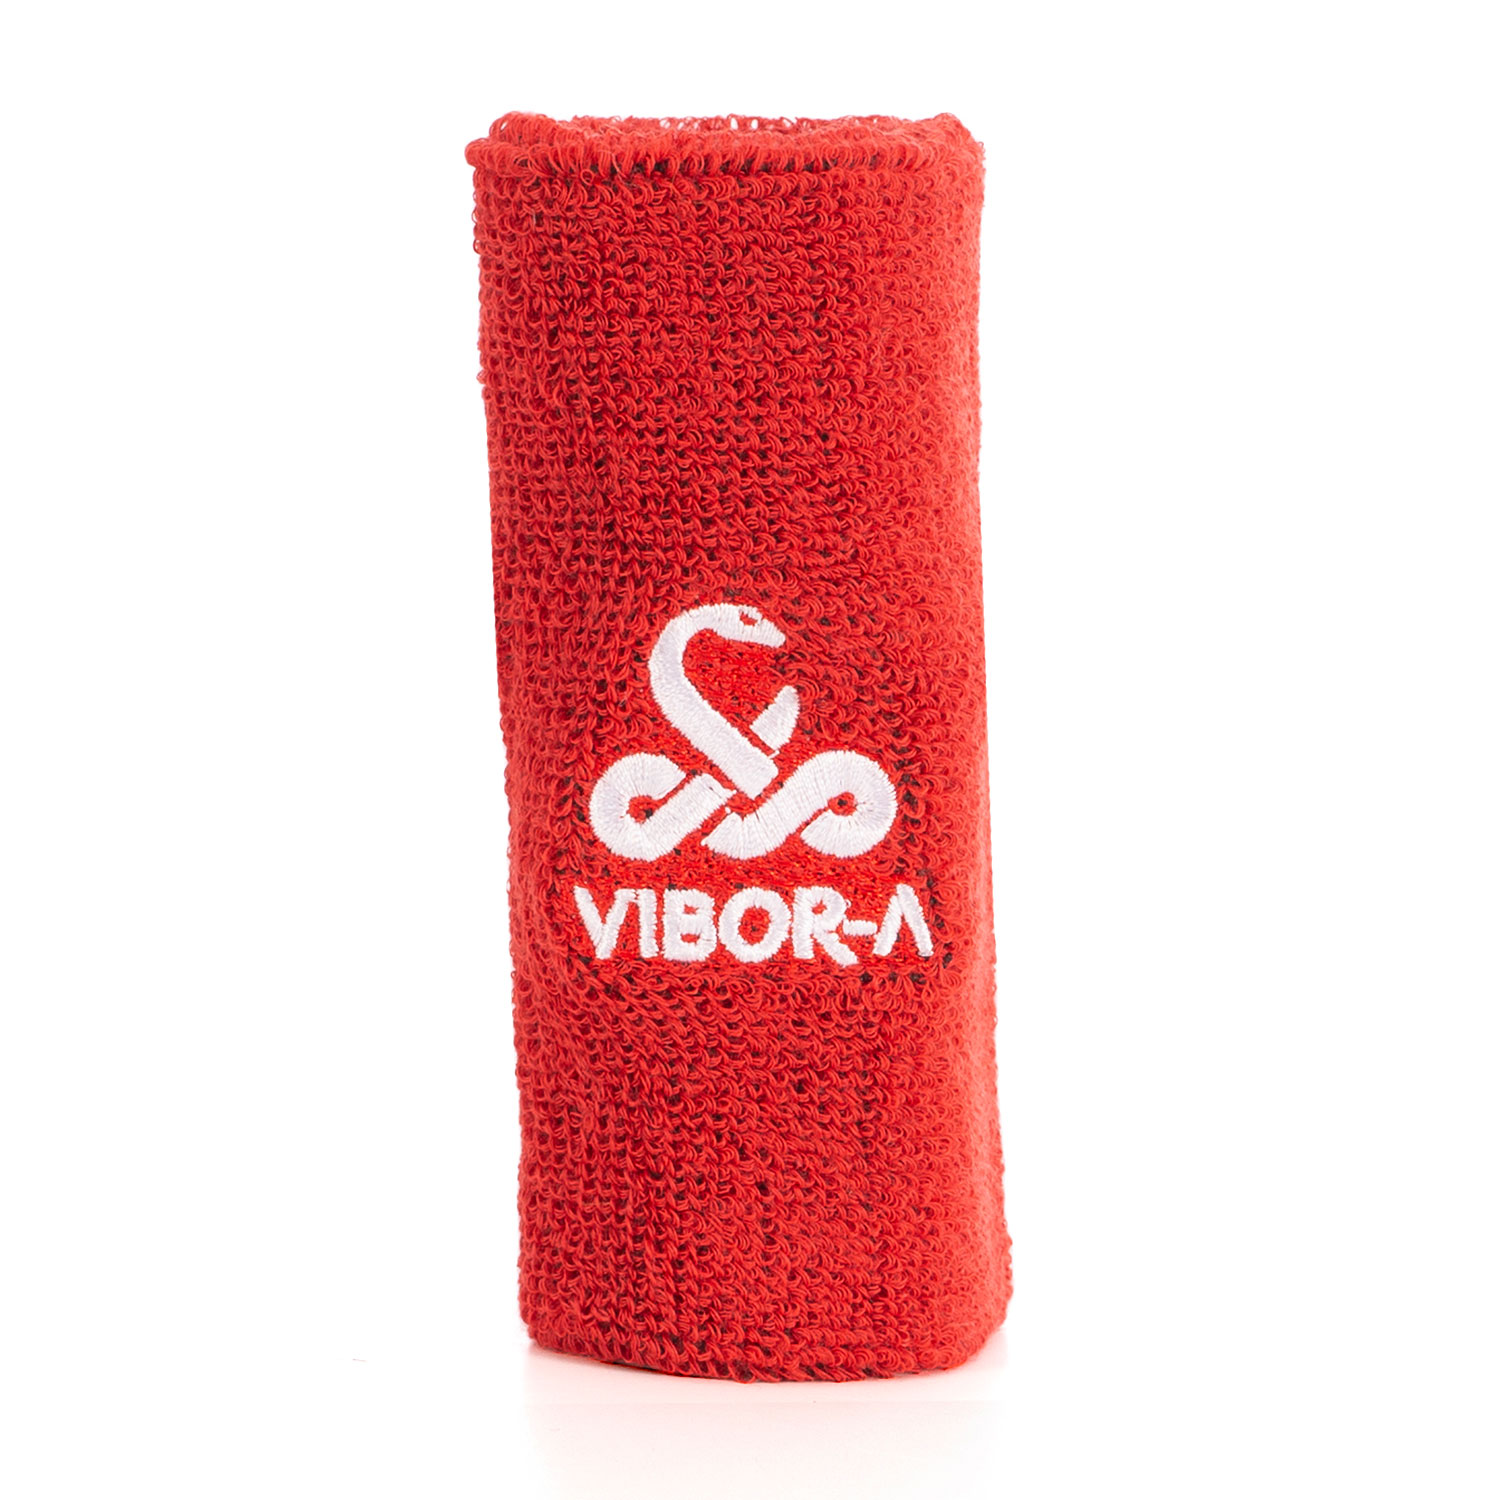 Vibor-A Ancha Long Wristband - Rosso